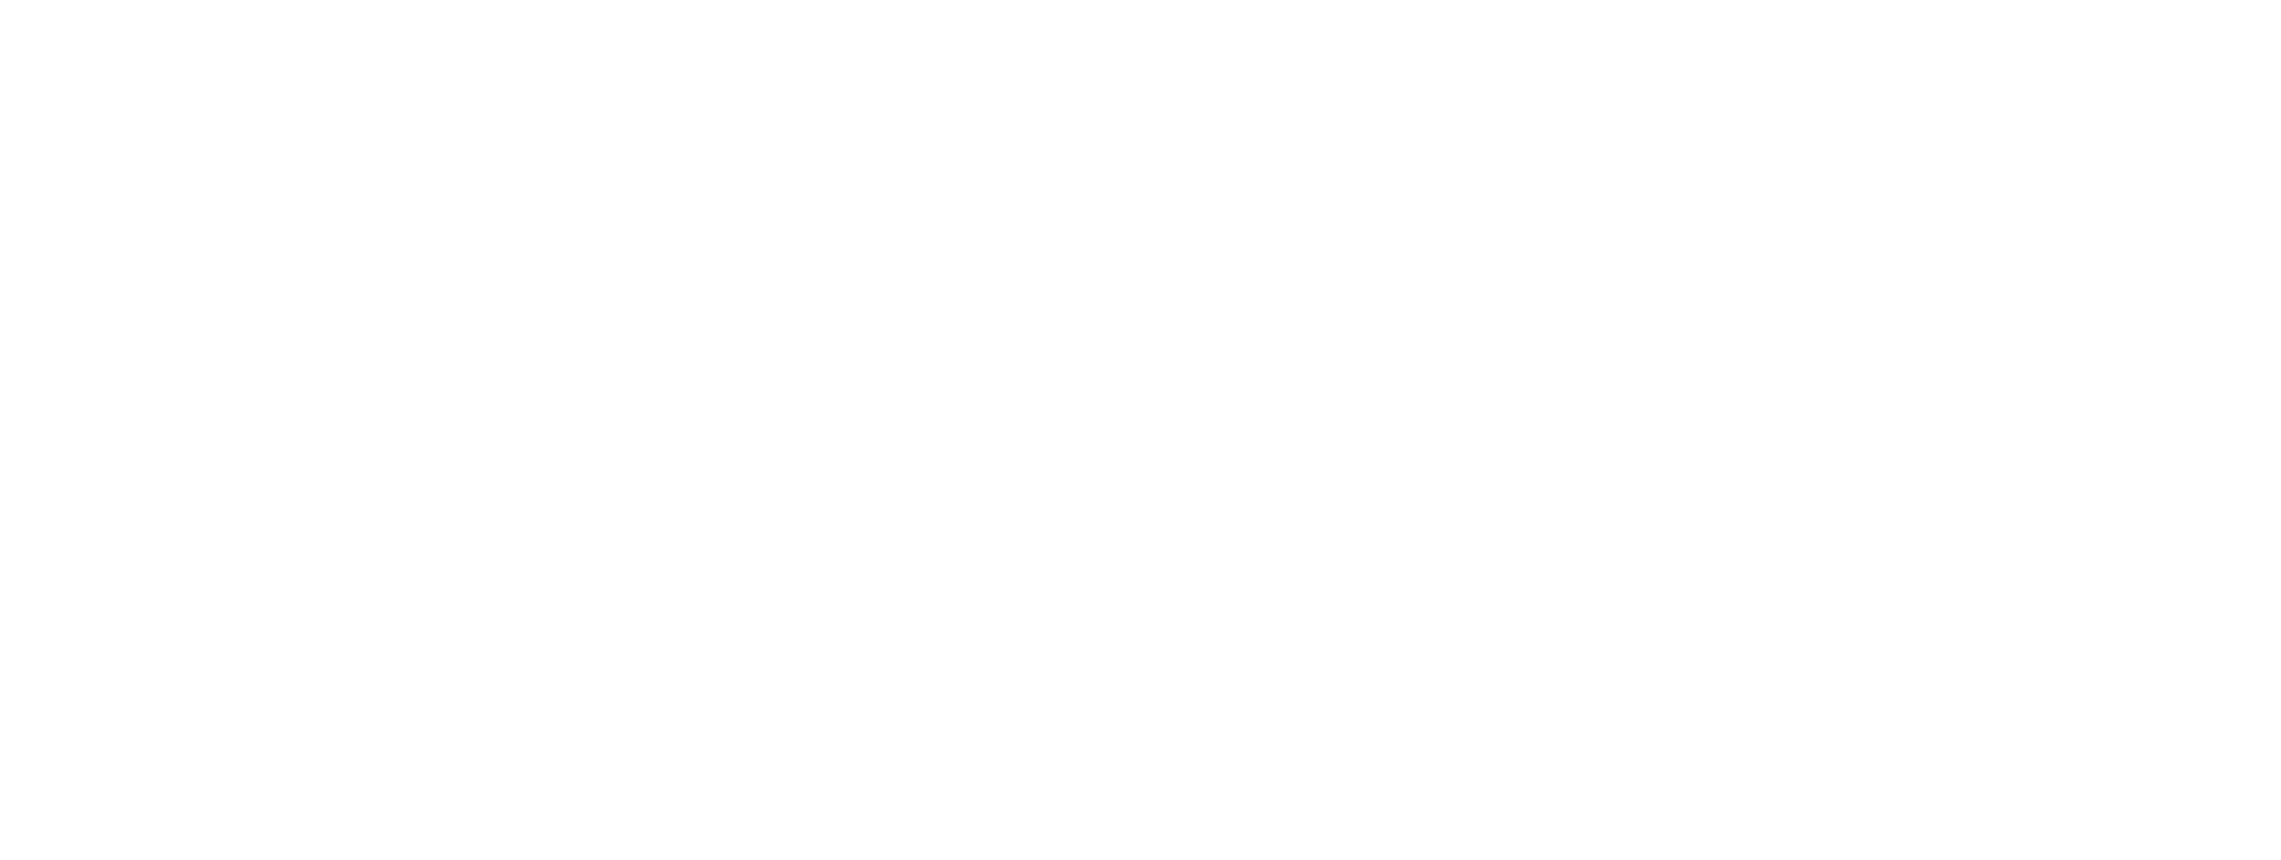 Rebuild White Logo - Rebuild Globally | Fighting Poverty in Haiti with Education, Job ...